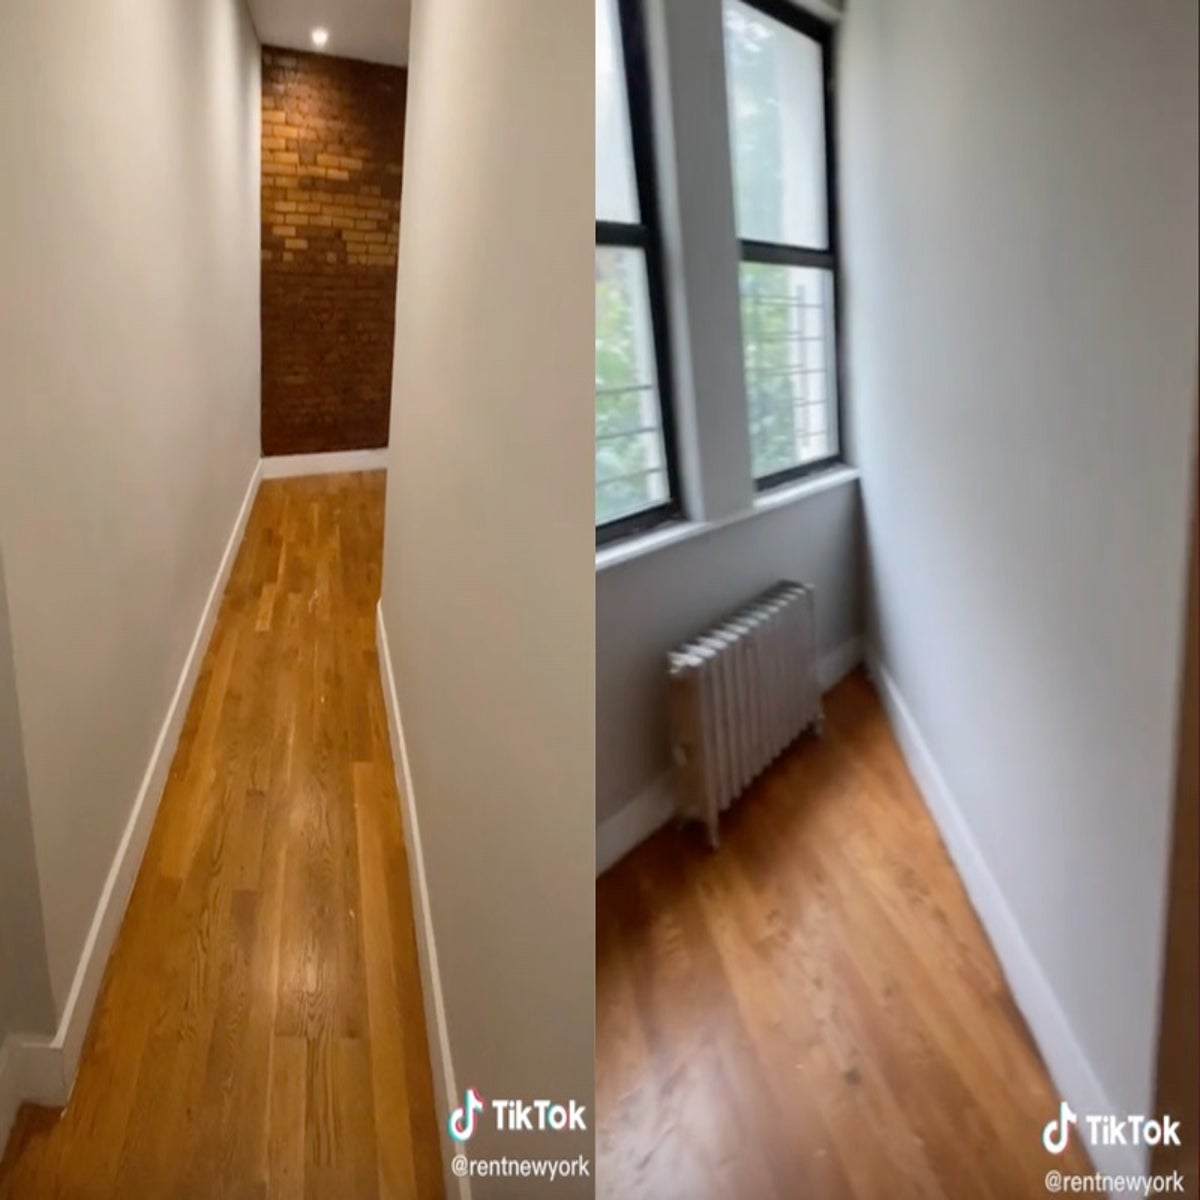 TikTok Users Critique 'Sad Beige' Apartment - The New York Times